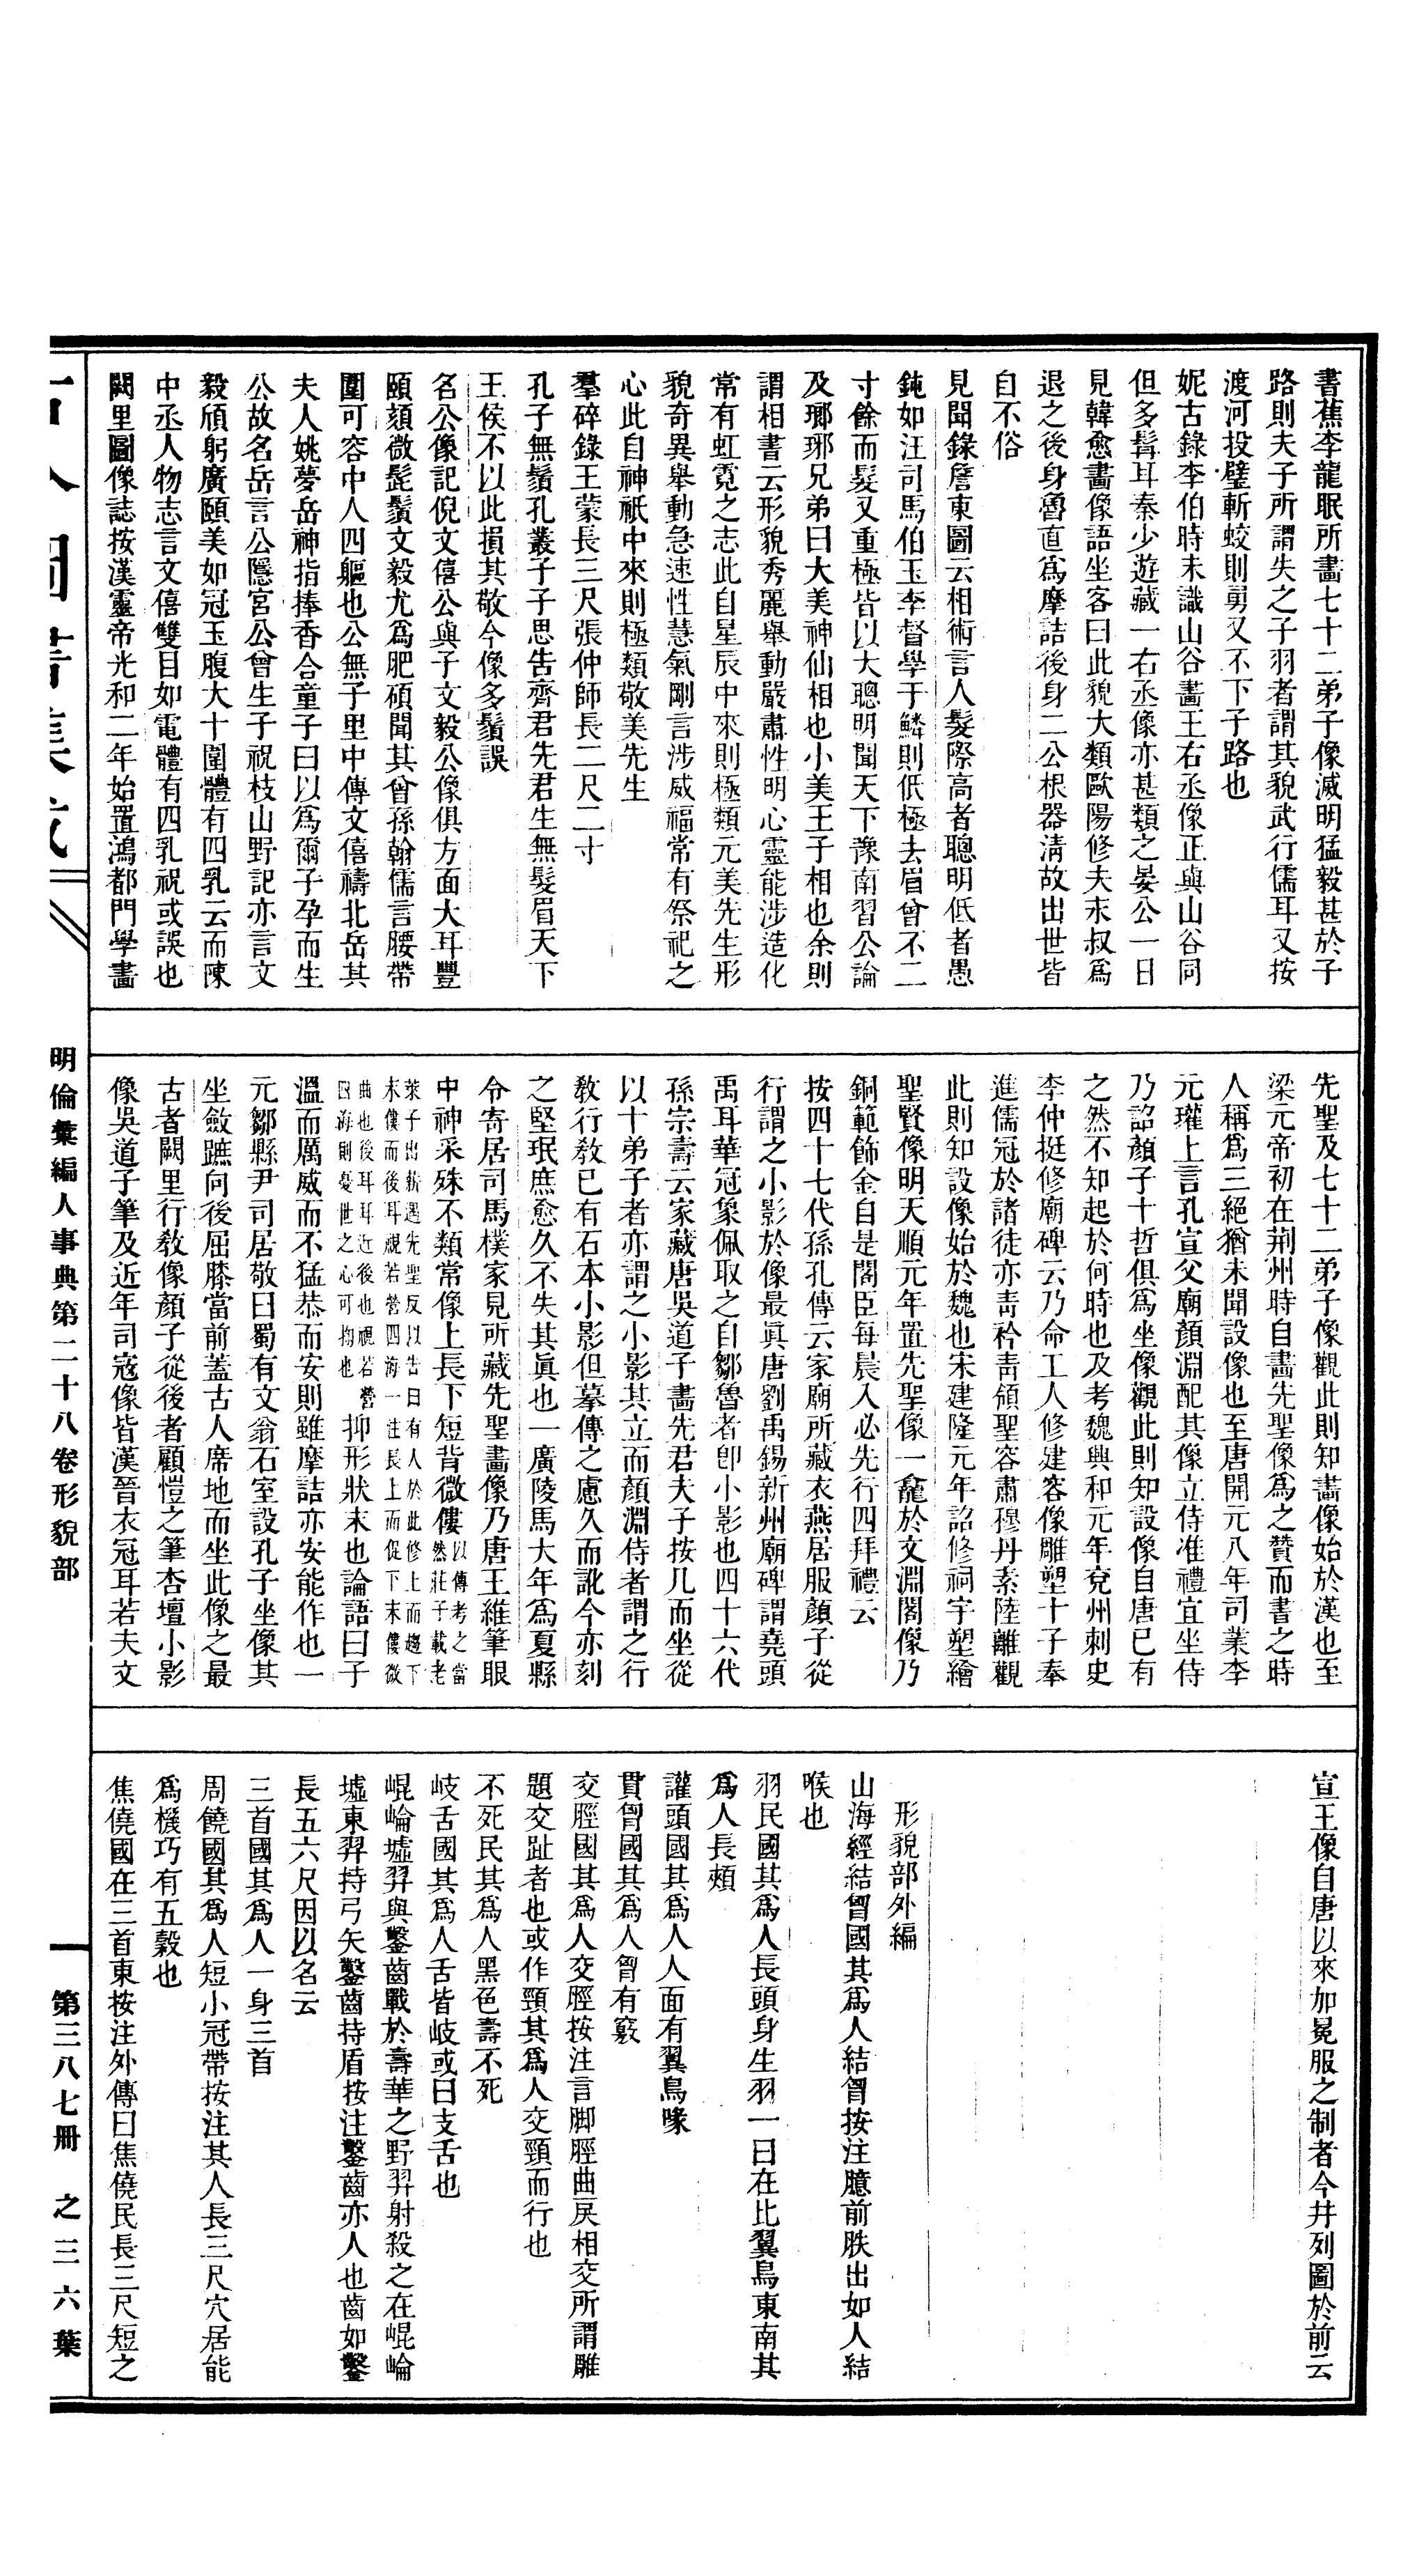 Page Gujin Tushu Jicheng Volume 387 1700 1725 Djvu 72 维基文库 自由的图书馆